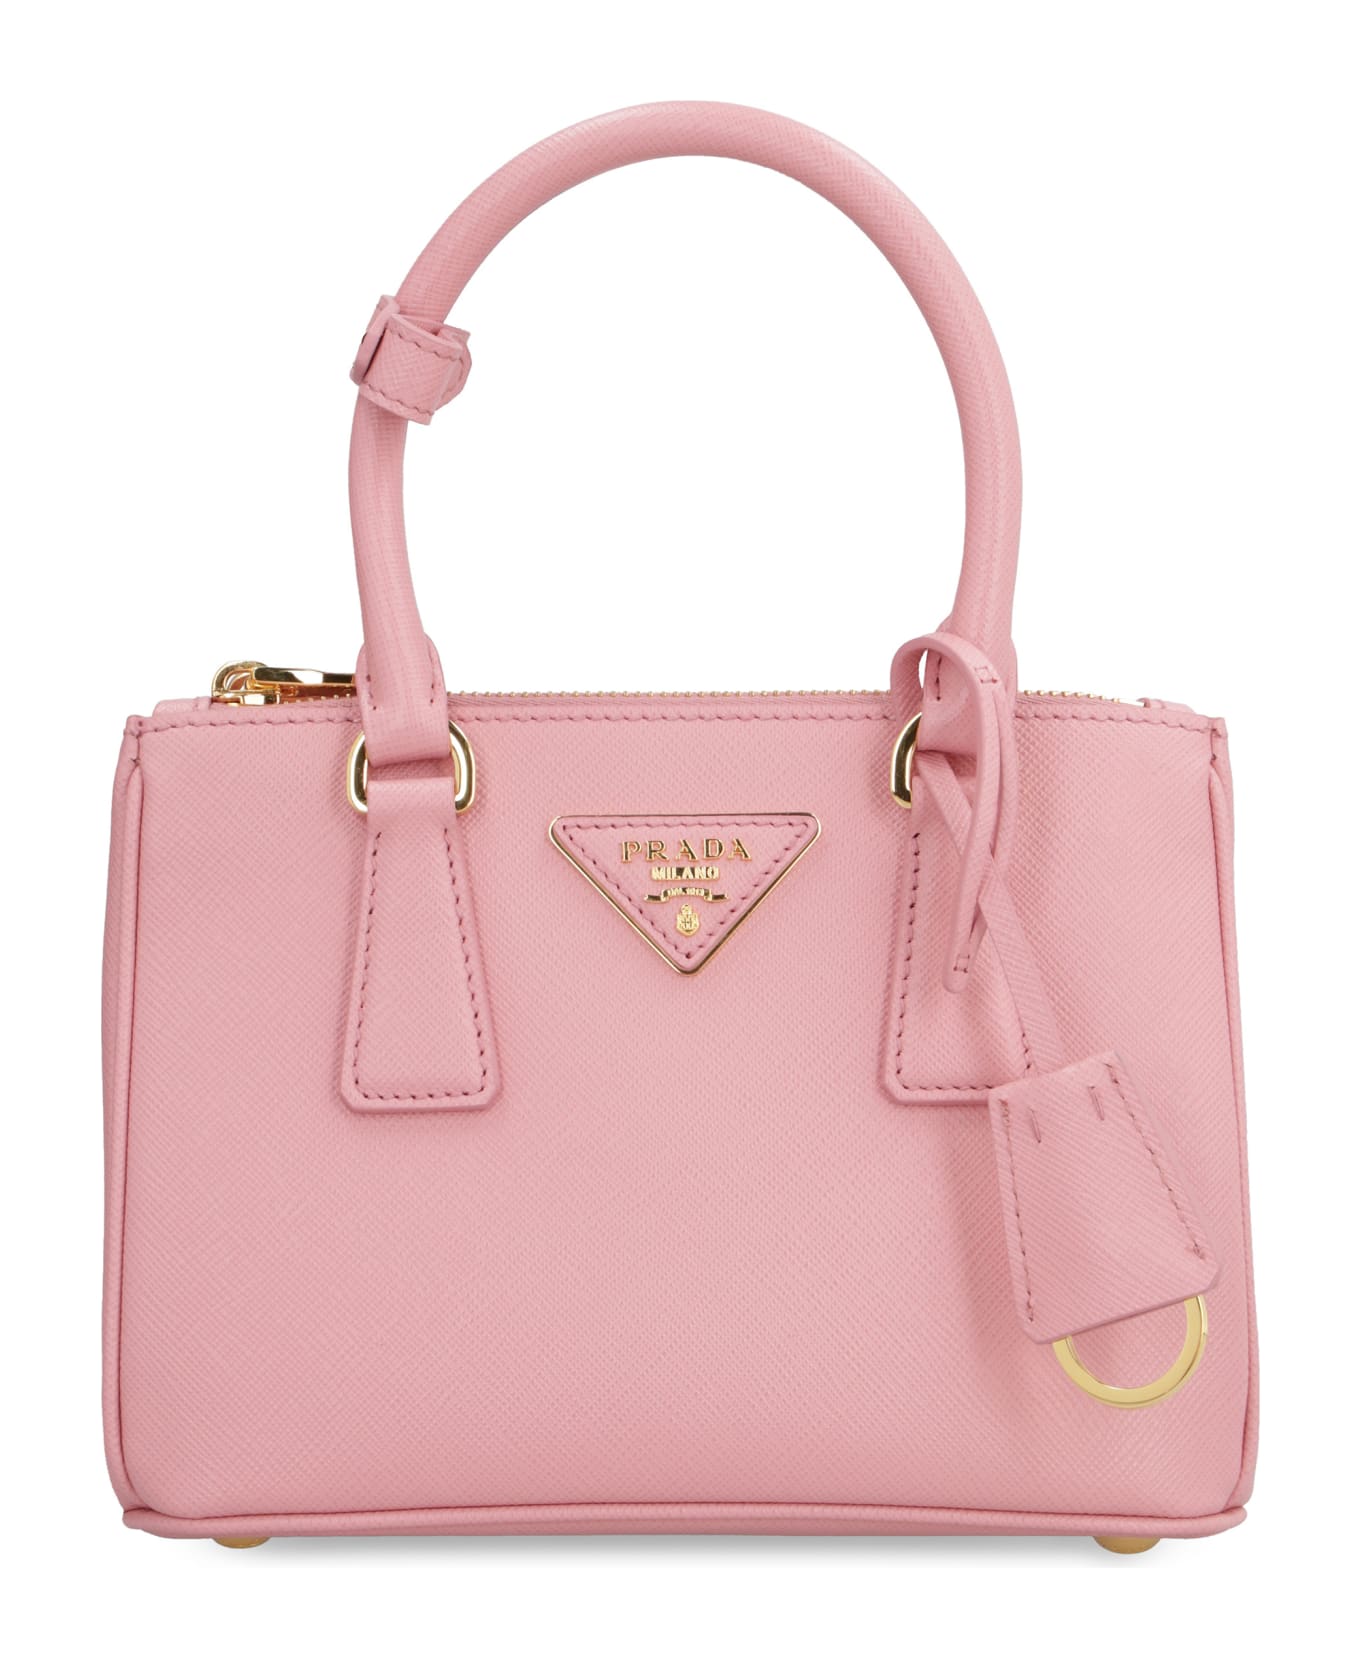 Prada Galleria Handbag - Pink